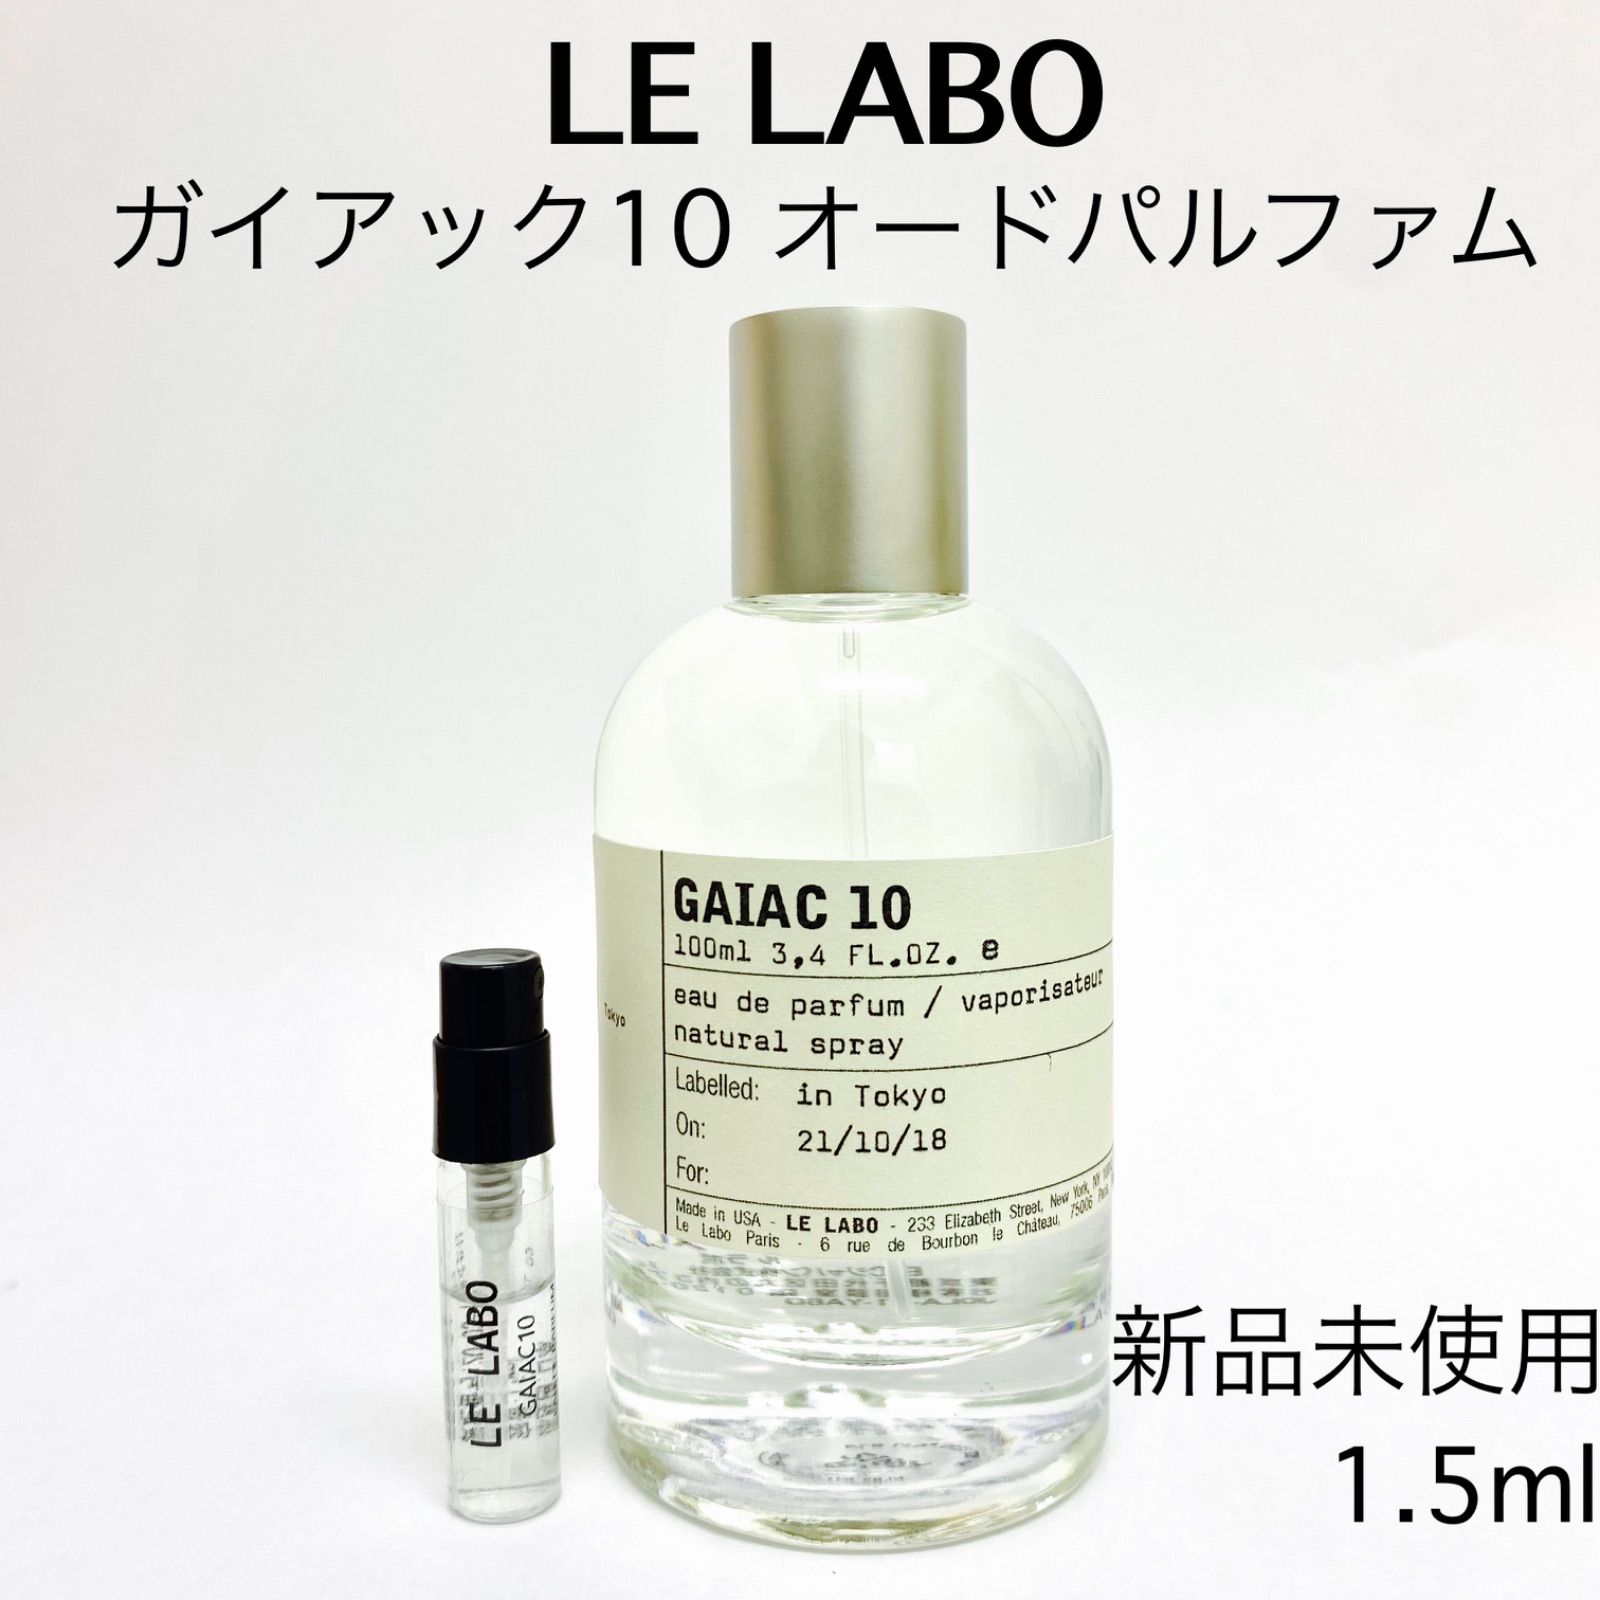 LELABO ルラボ ガイアック 香水 1.5ml - セット割実施☆ - メルカリ